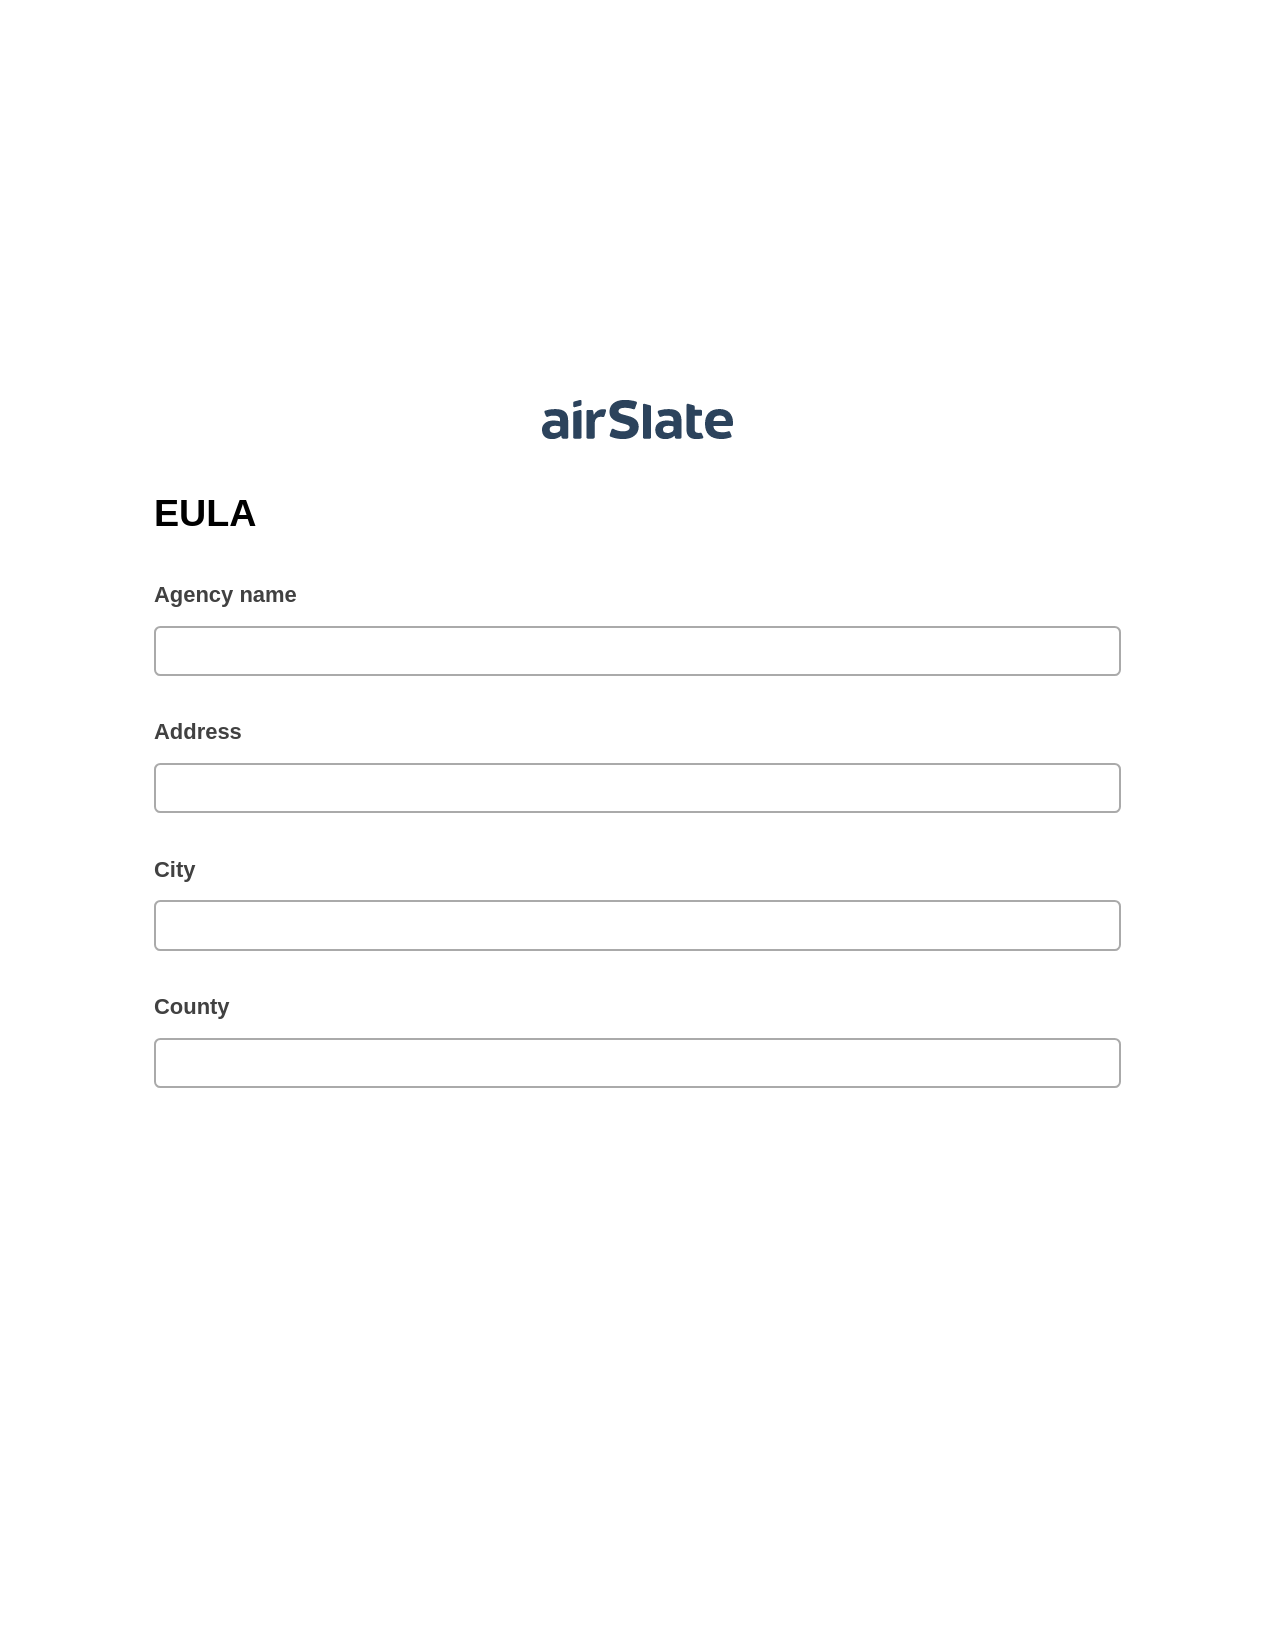 EULA Pre-fill from CSV File Dropdown Options Bot, Slack Notification Bot, Webhook Postfinish Bot